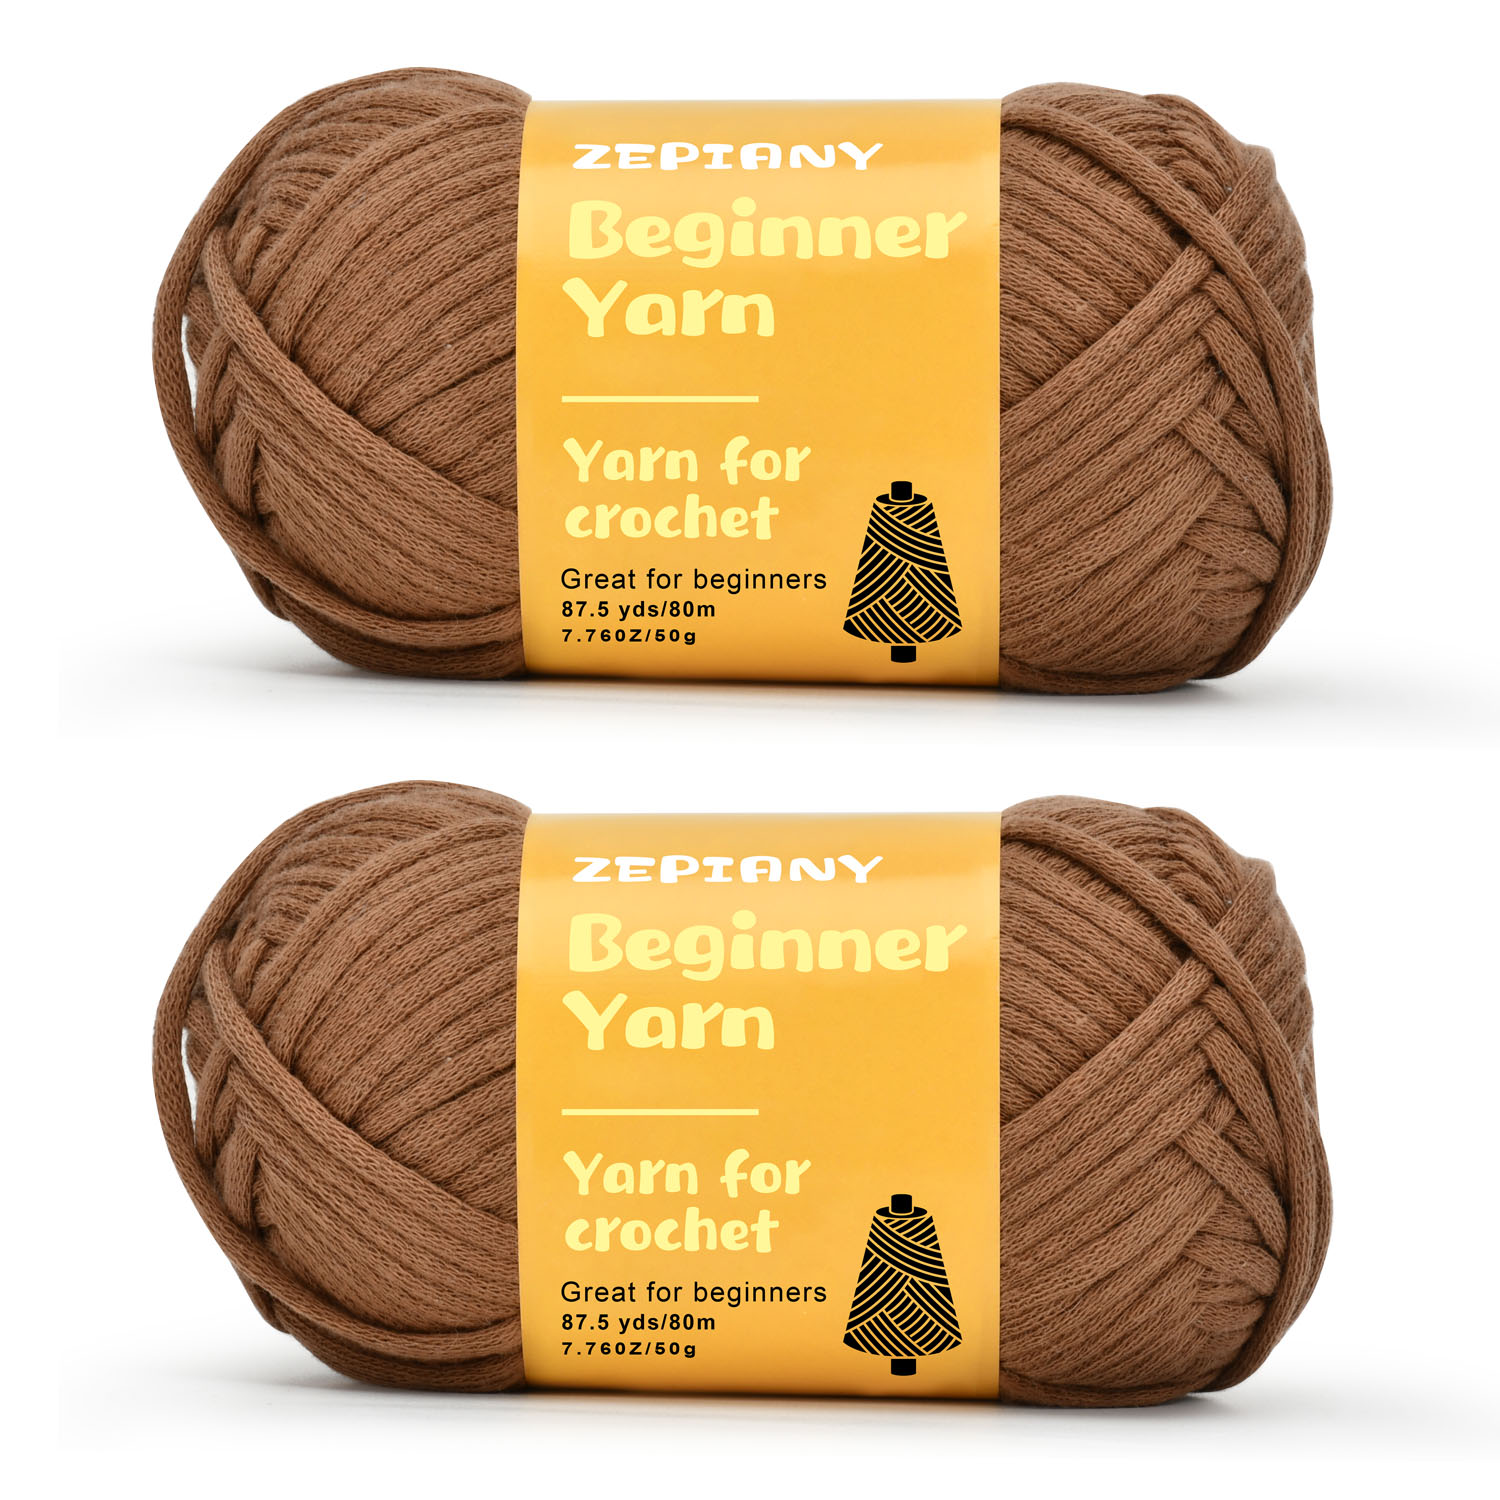 Knitting Yarn Crochet Yarn Accessories 90m Lightweight Knitting Thread Polyester Yarn for Crochet Projects Beginners Knitting Brown